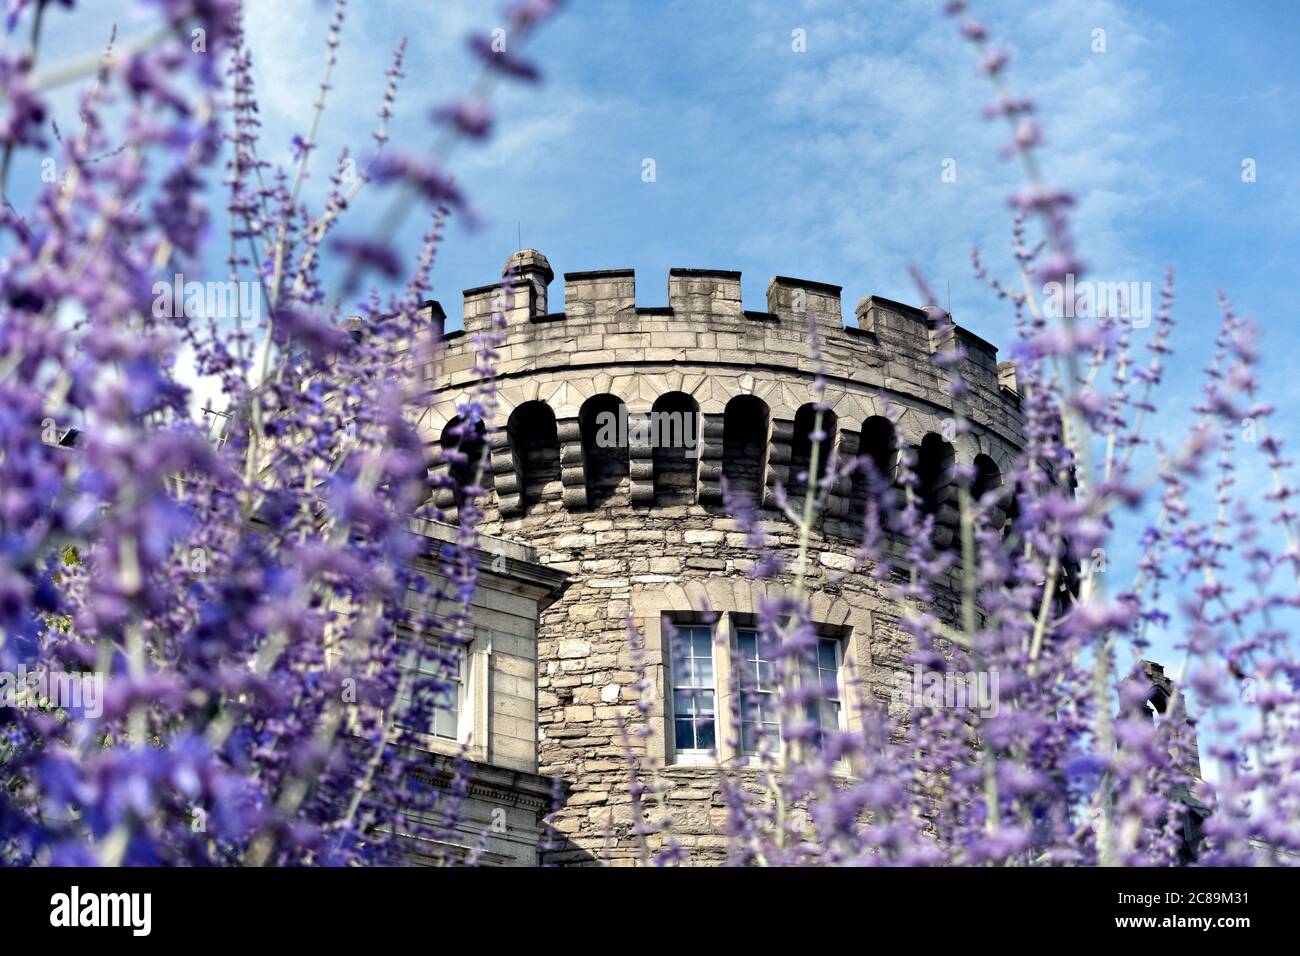 Dublin Castle Record Tower, 13. Jahrhundert. Historisches mittelalterliches Gebäude.Dublin, Republik Irland, Europa, Europäische Union, EU. Nahaufnahme. Stockfoto